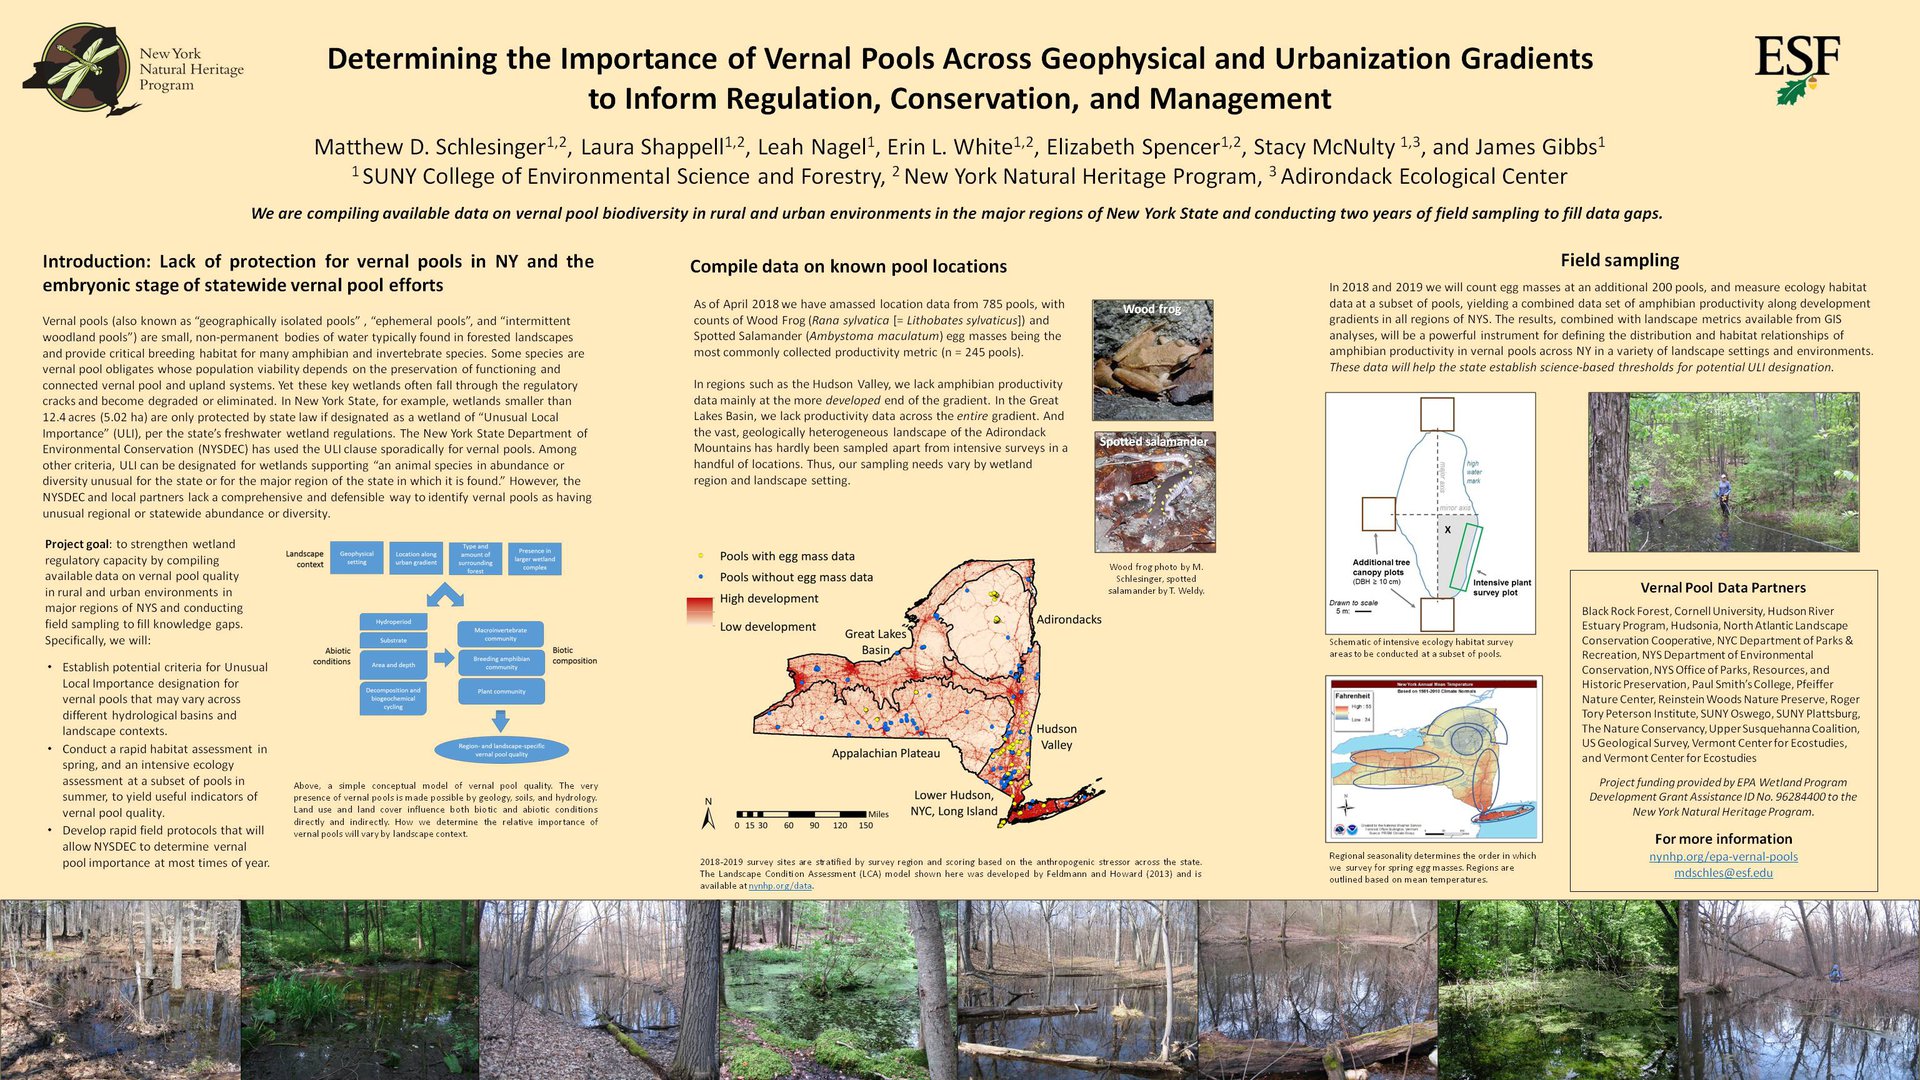 2018 Northeast Natural History Conference poster presentation (Revised Feb 2019).